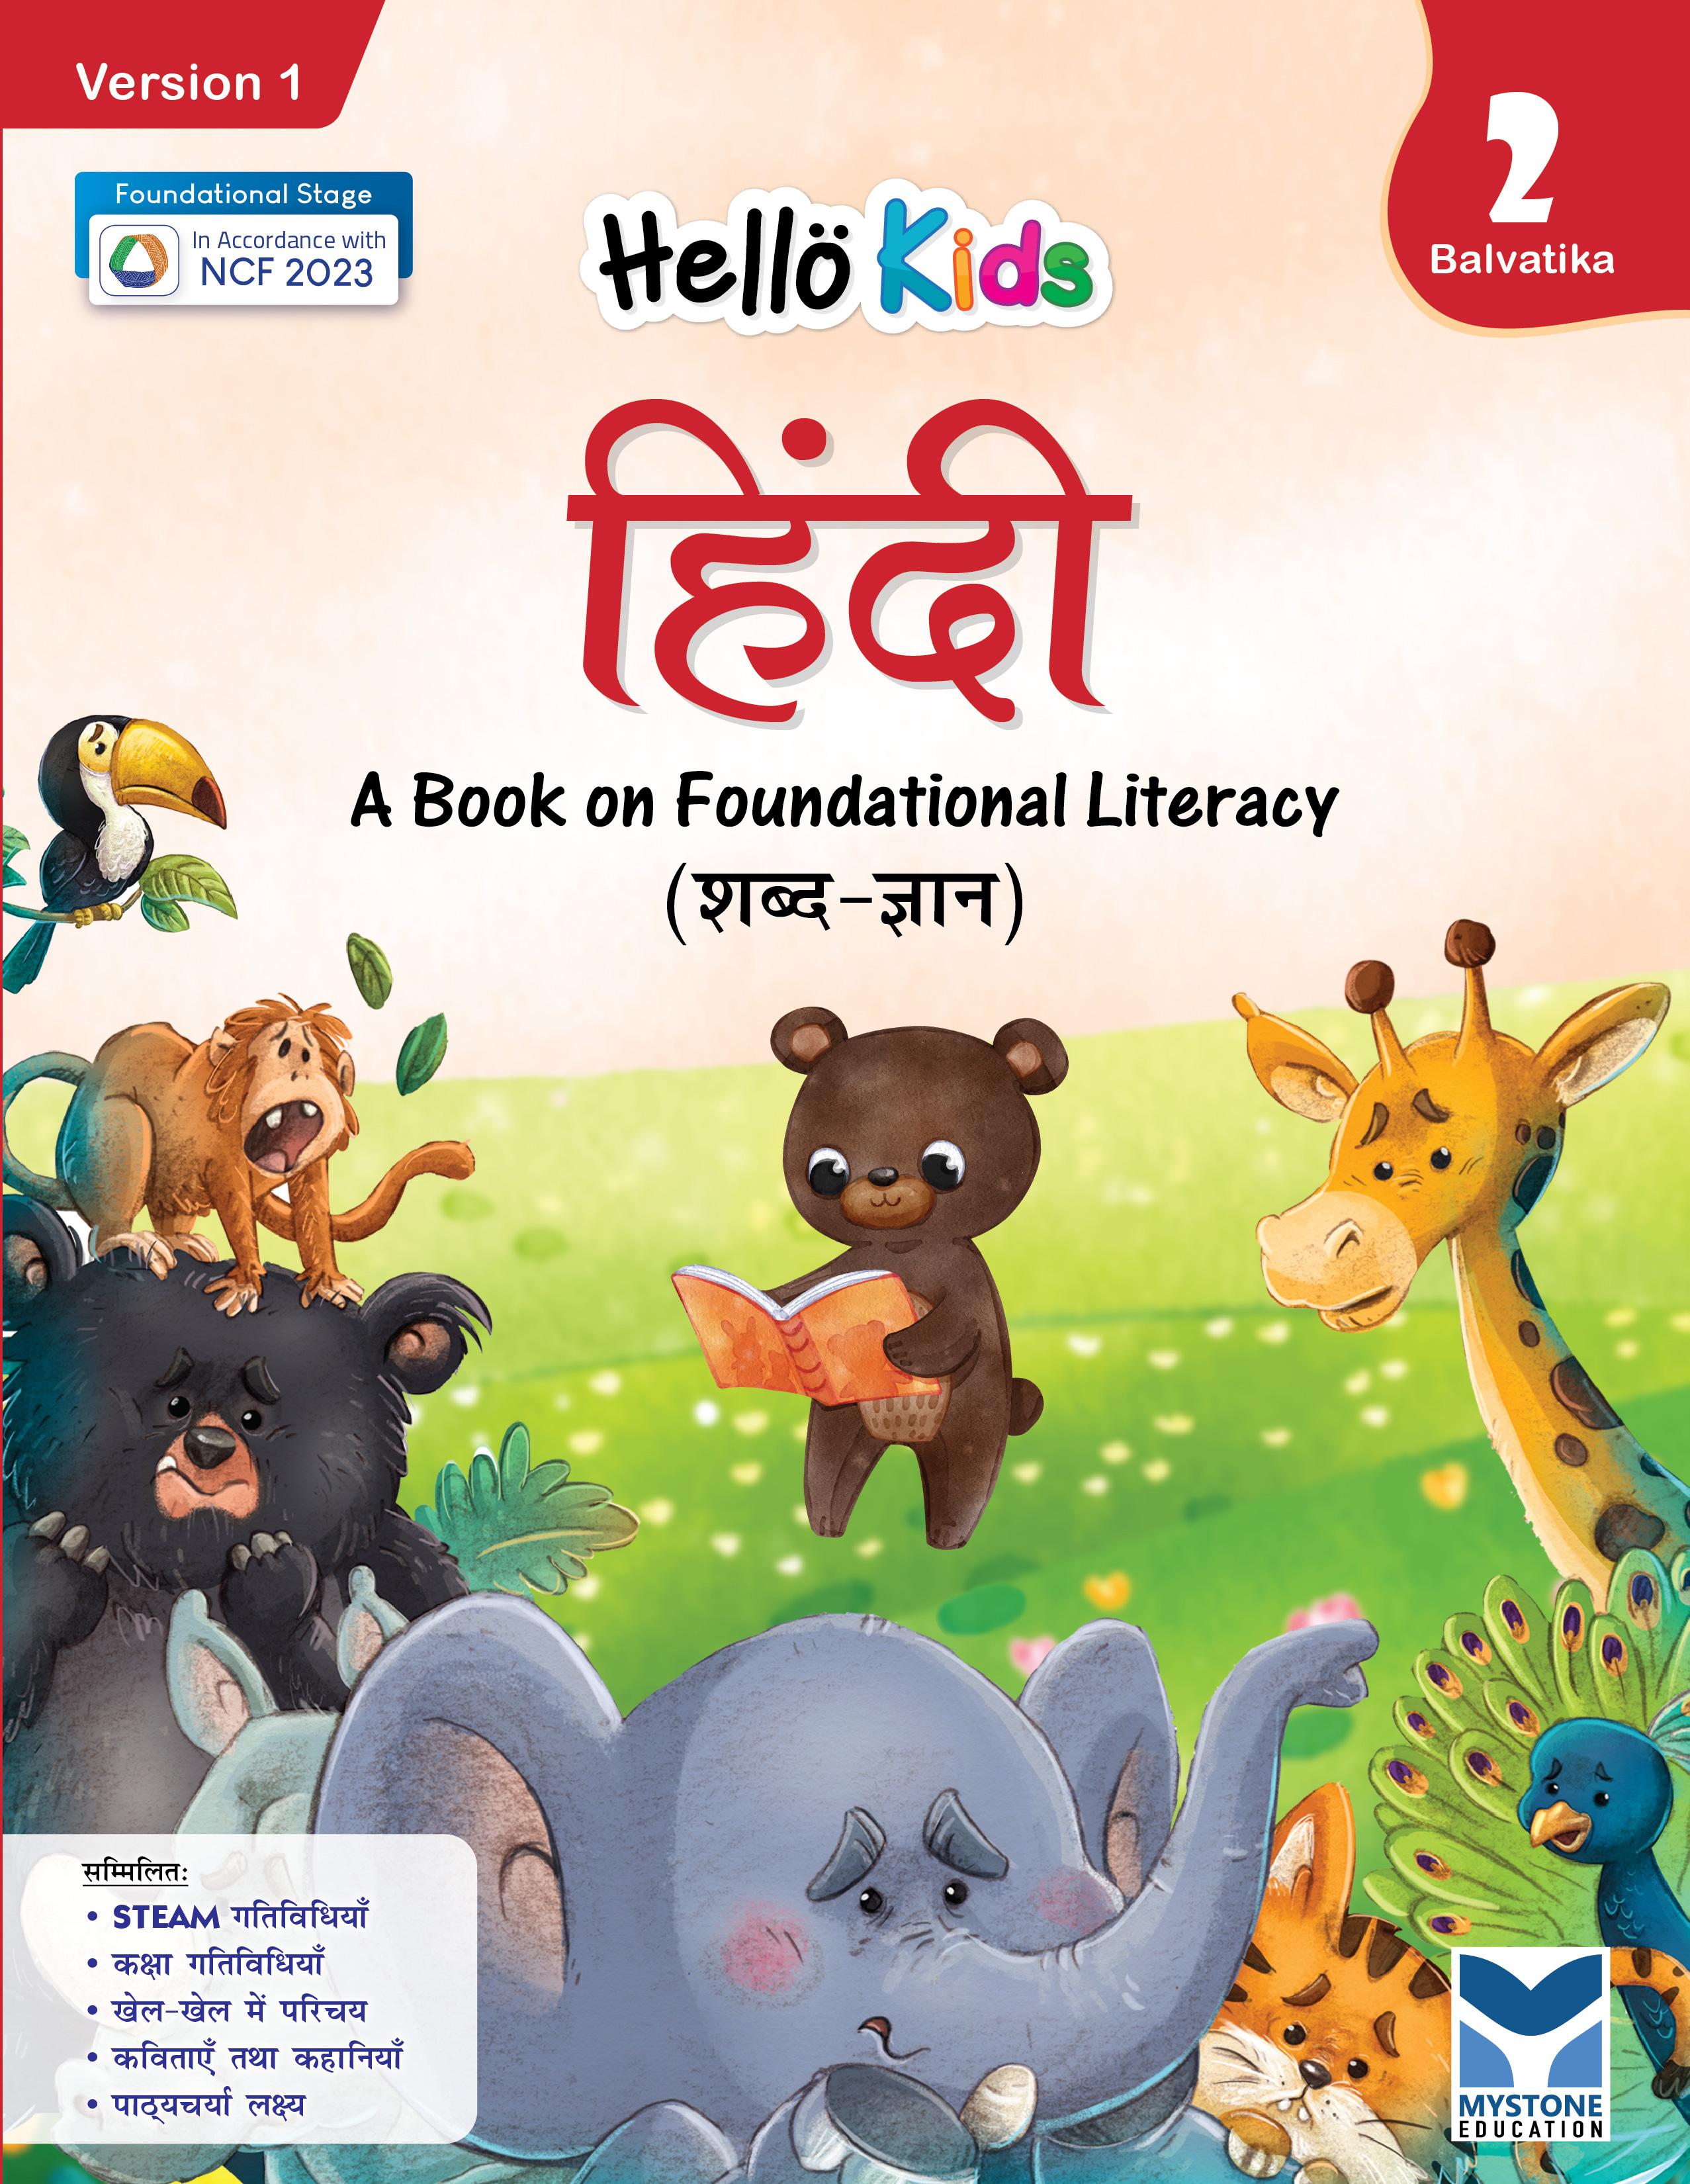 Hello Kids Hindi Balvatika 2 Ver. 1